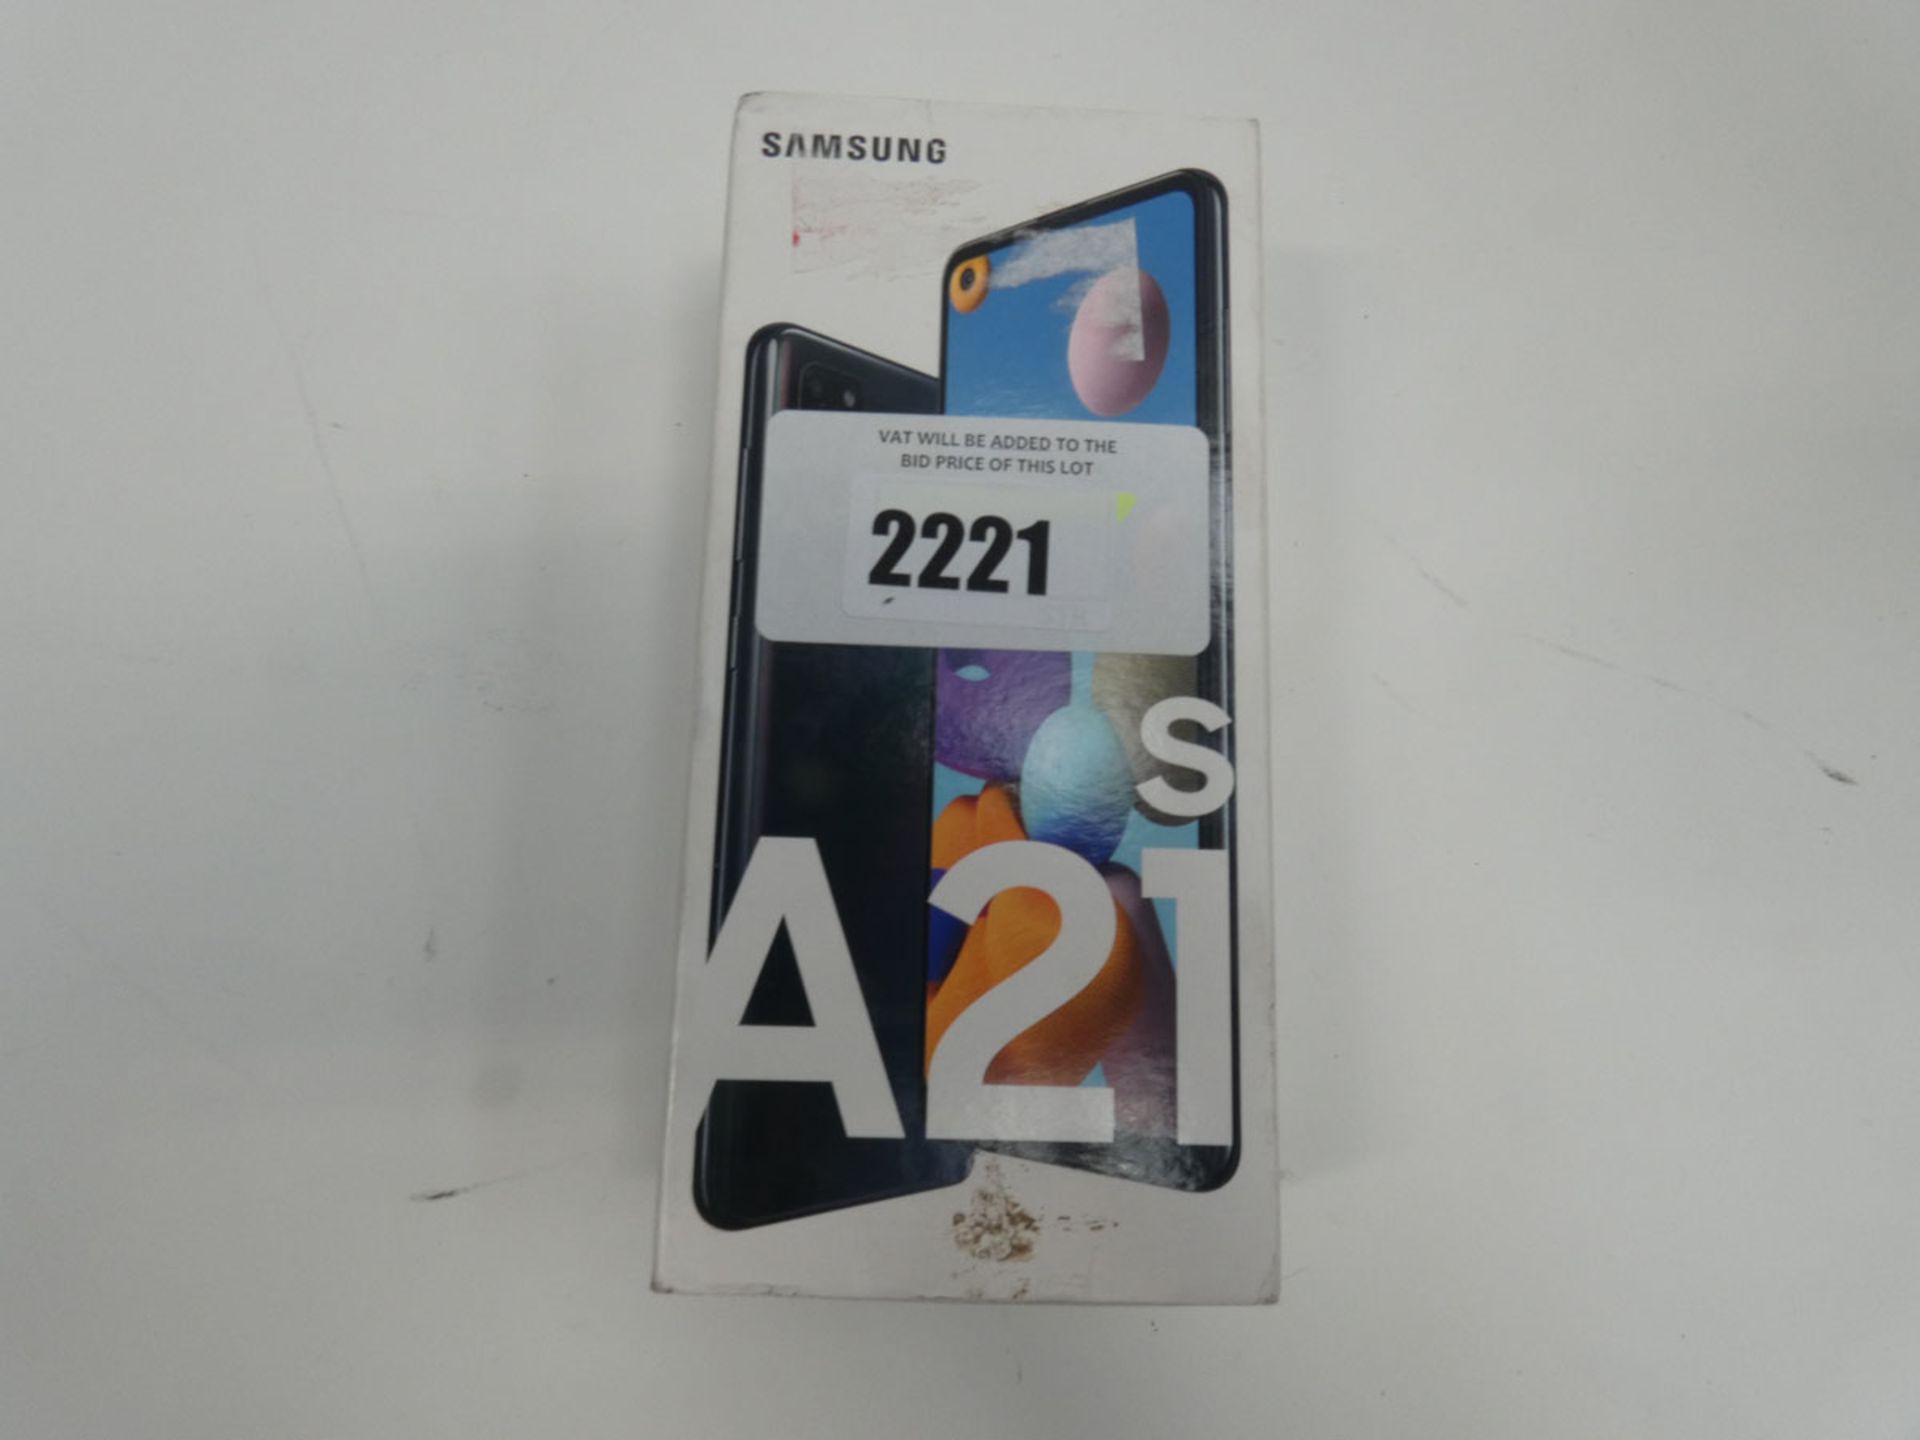 Samsung A21S 32GB Black smartphone in box